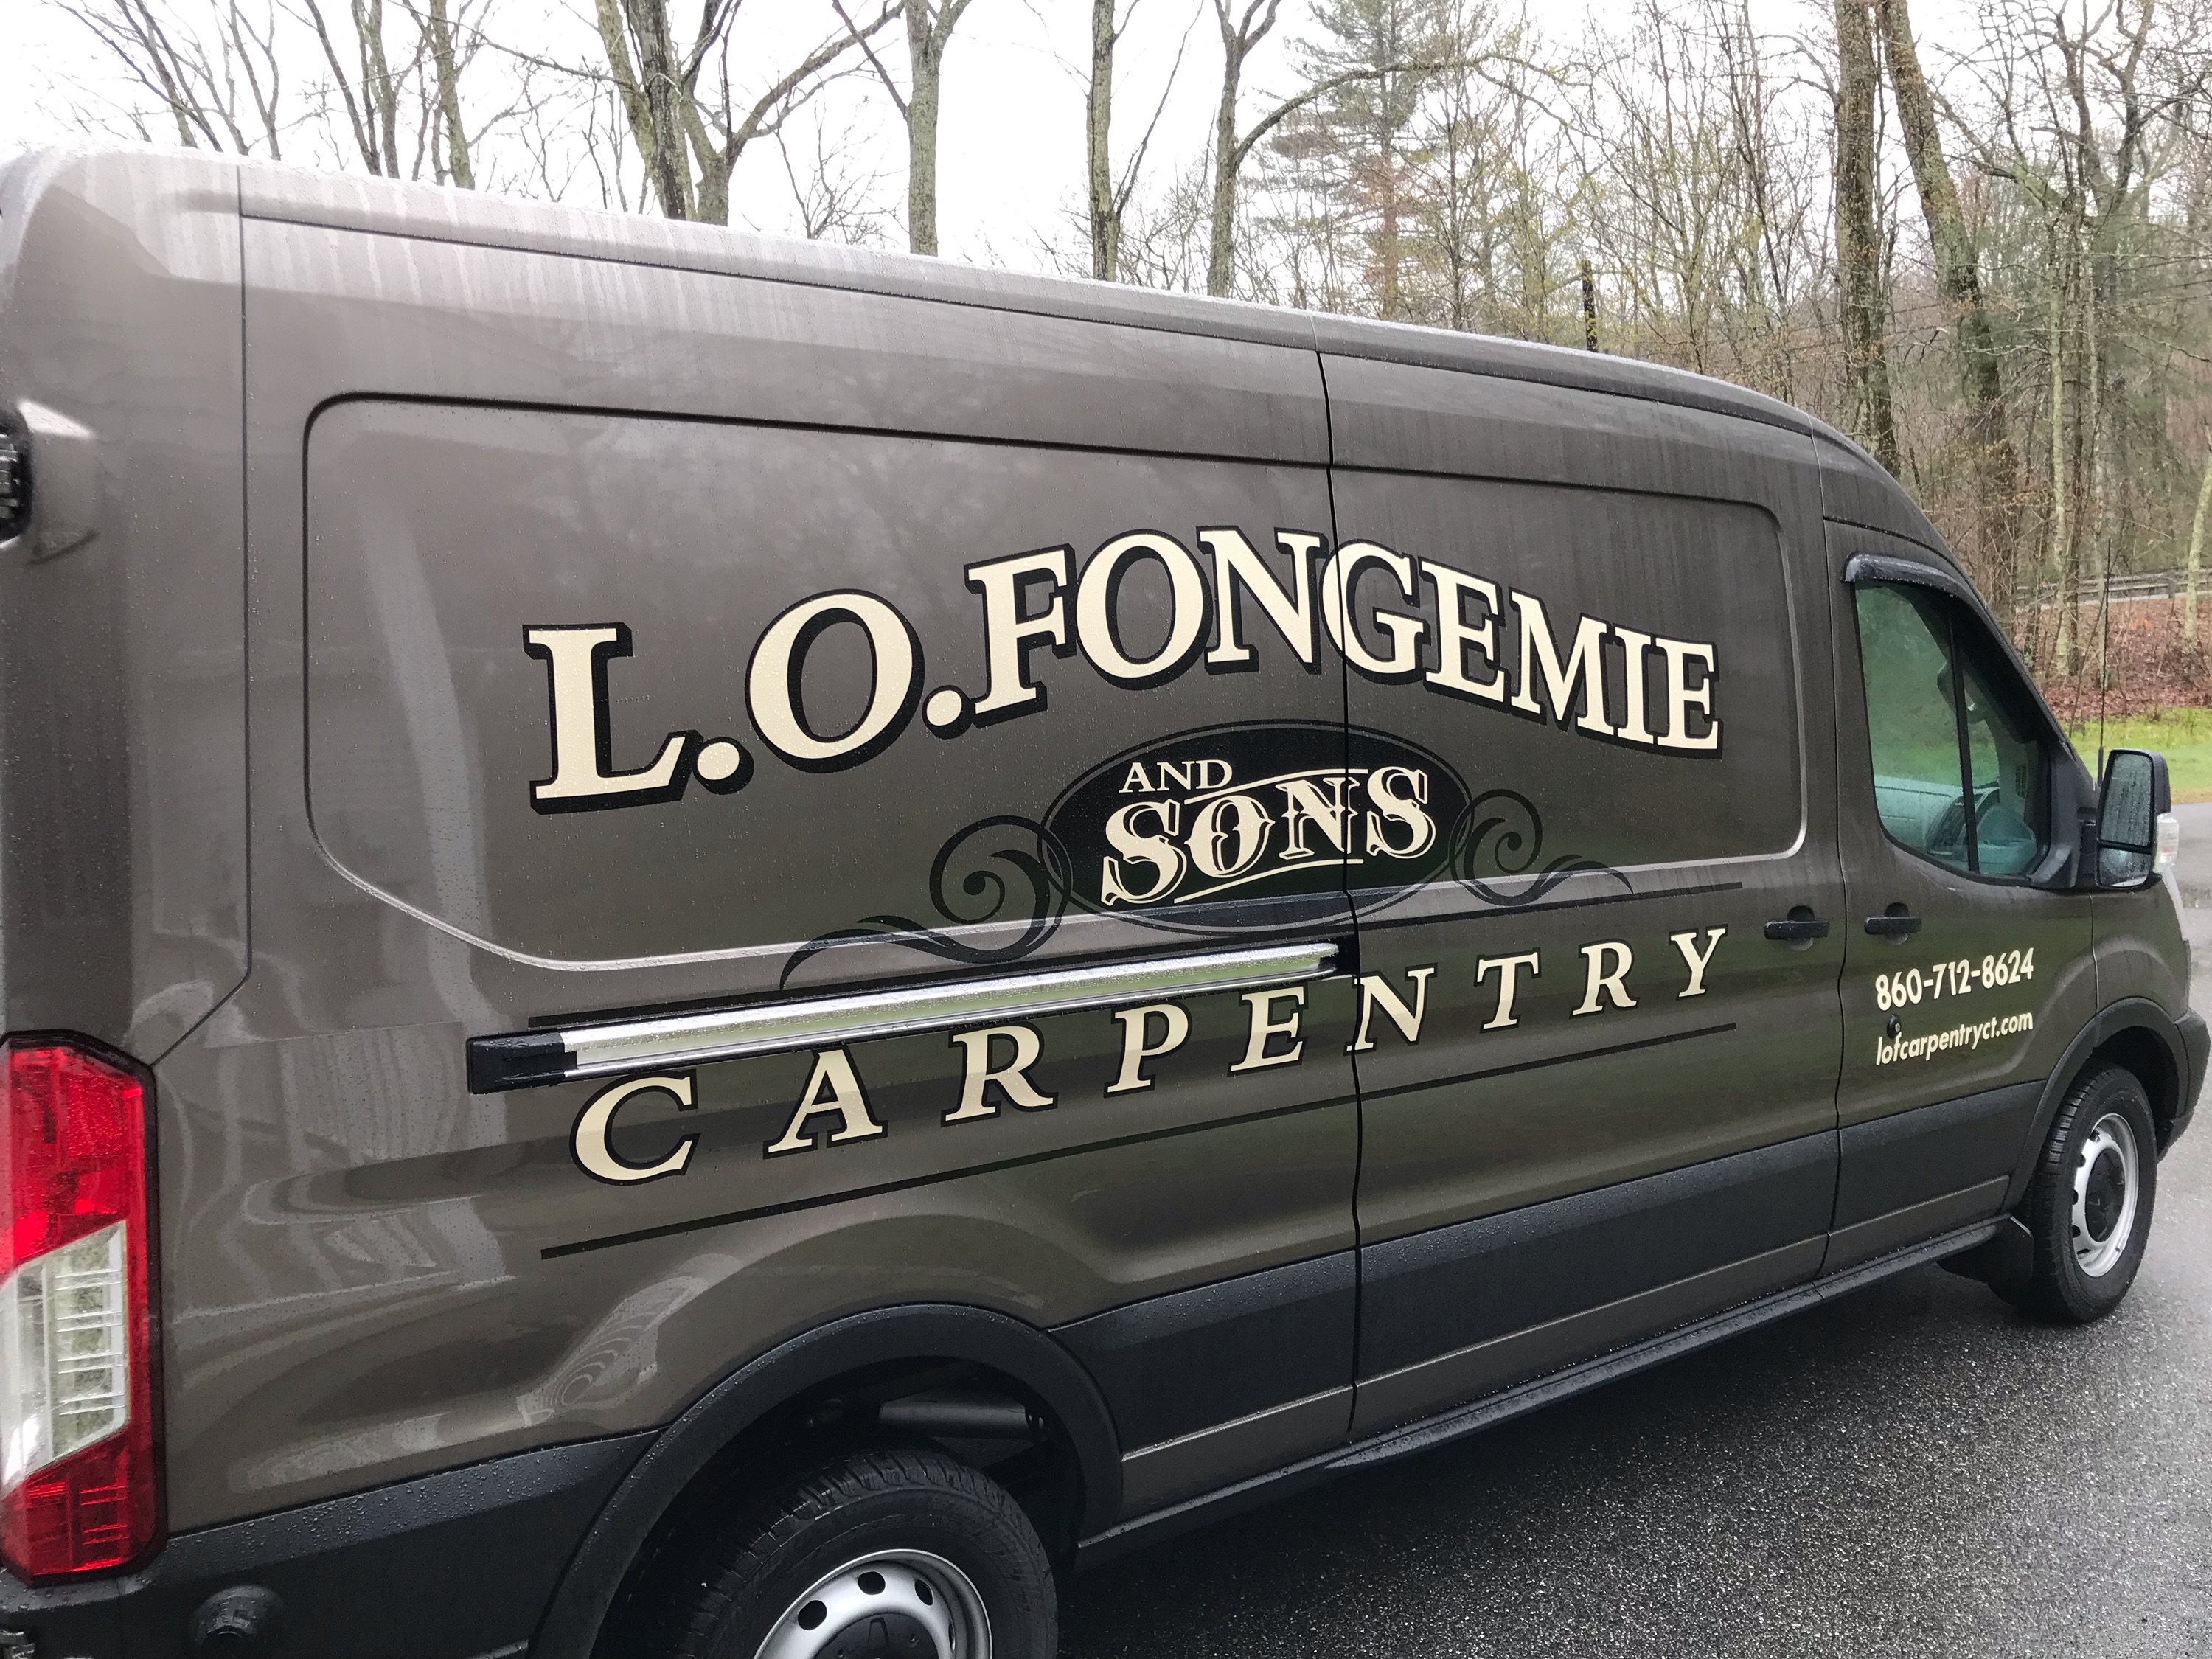 L.O. Fongemie & Sons Carpentry Logo